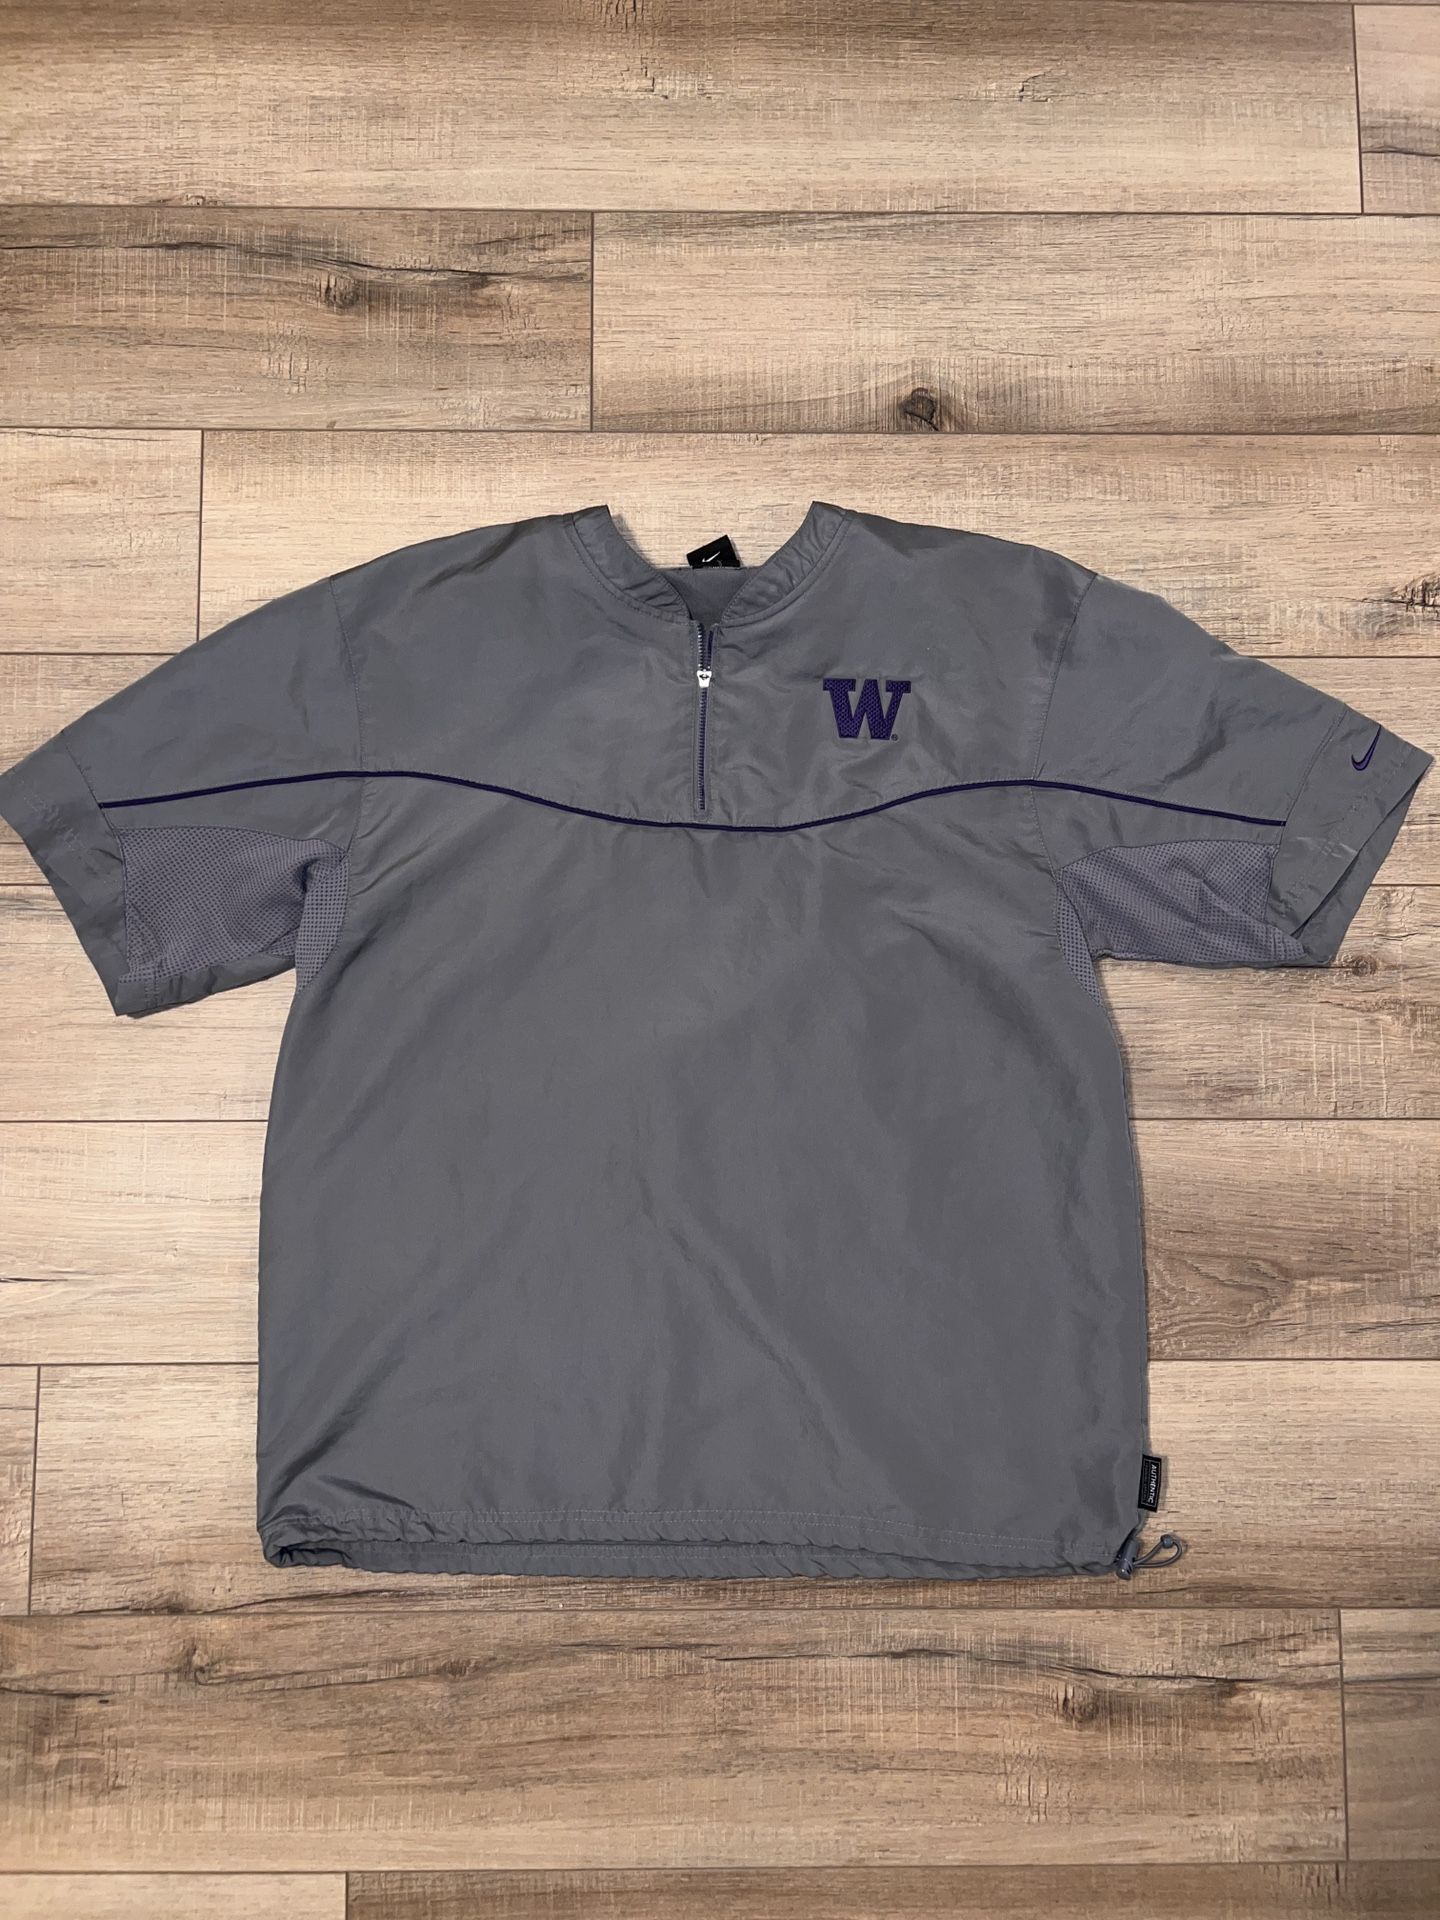 Nike Dri-Fit Team UW University of Washington Huskies Lightweight Pullover Shirt Windbreaker Jacket